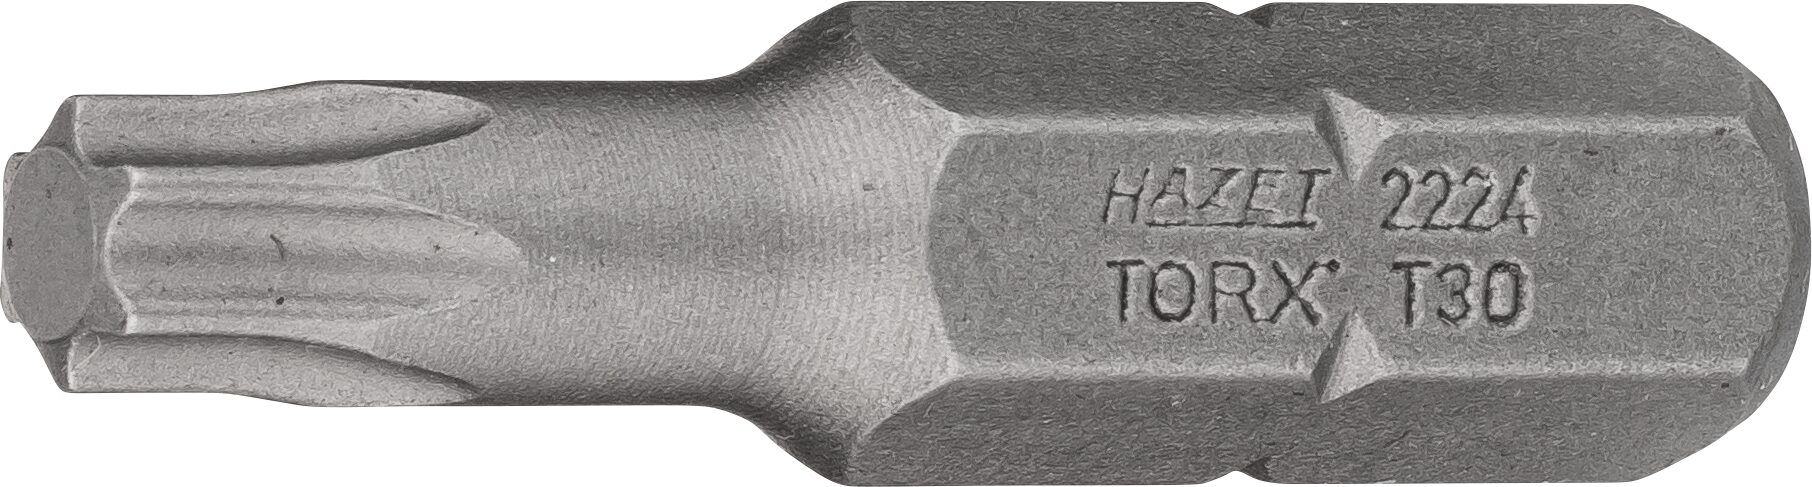 HAZET Bit 2224-T30 · Sechskant massiv 8 (5/16 Zoll) · Innen TORX® Profil · T30